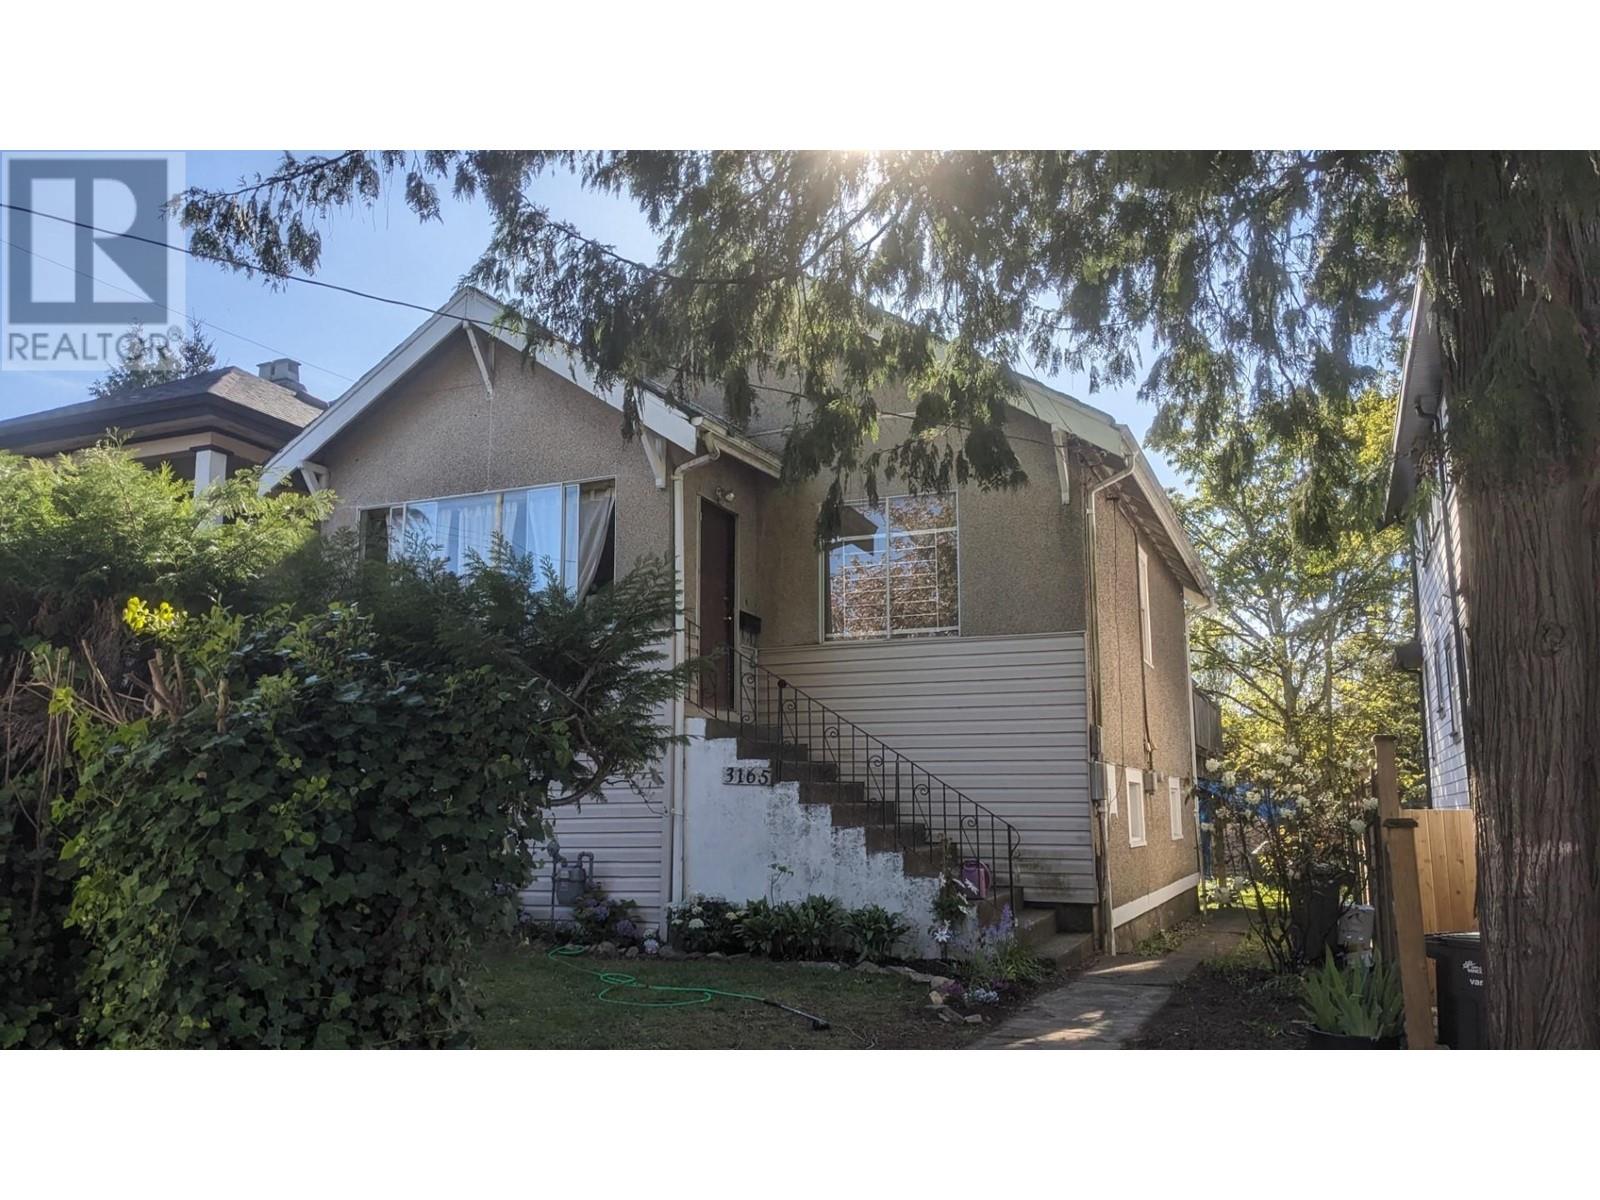 4 Bedroom Residential Home For Sale | 3165 Glen Drive | Vancouver | V5T4C3